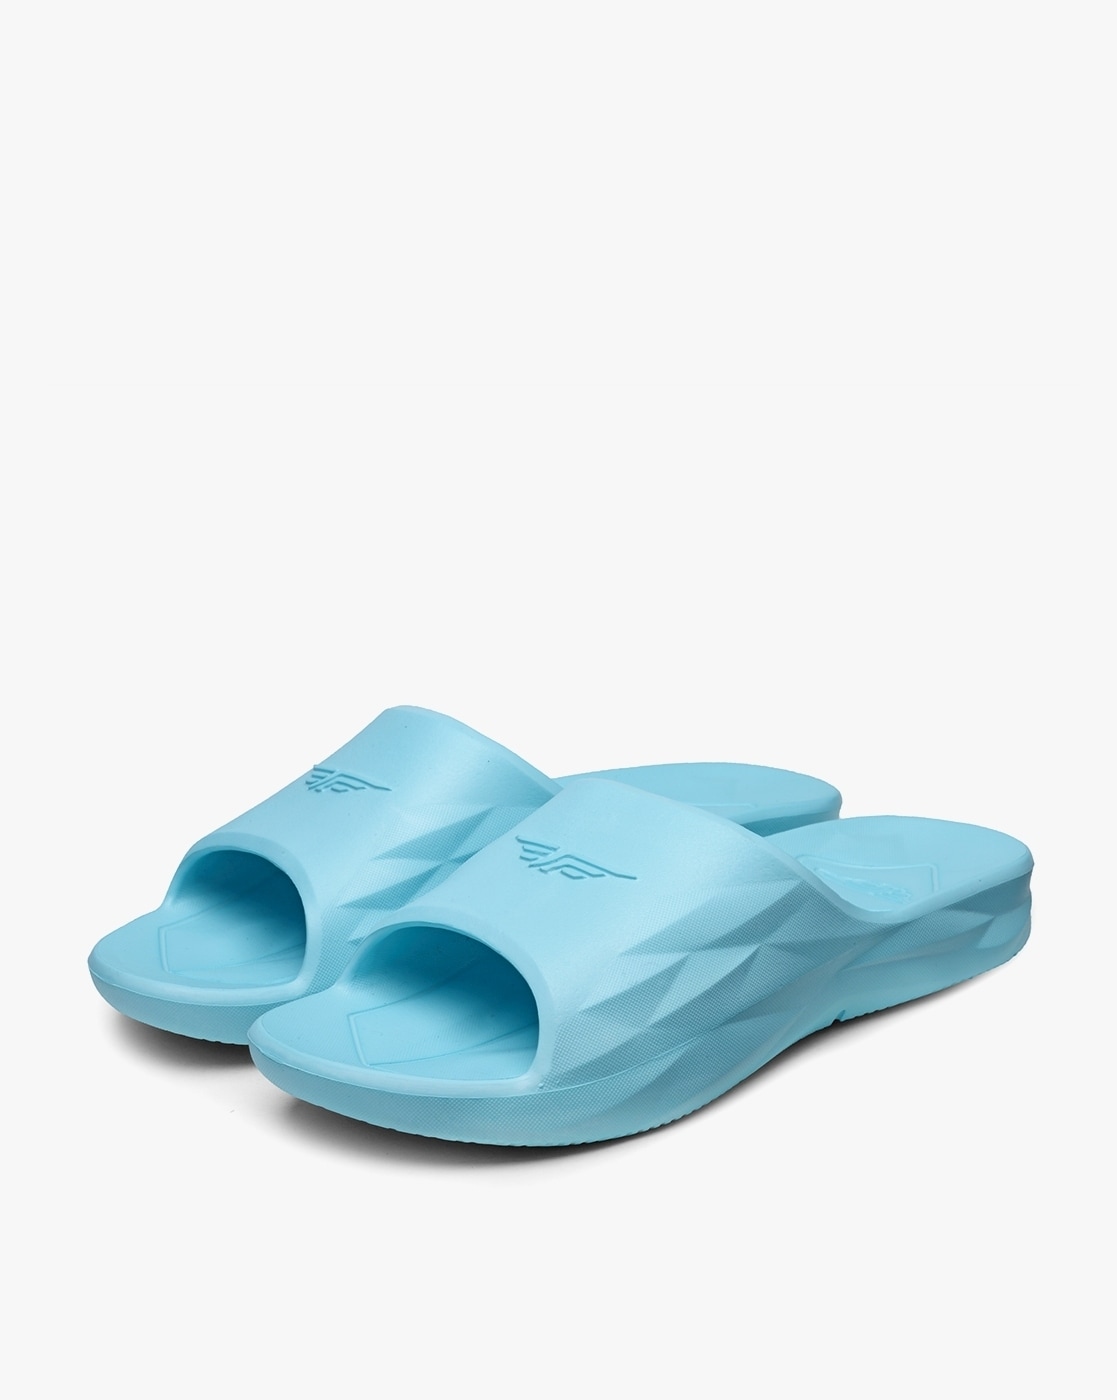 Dr Scholls Staycay slippers SlIdes Sky Blue Sz 10M indoor/outdoor Faux Fur  New | eBay